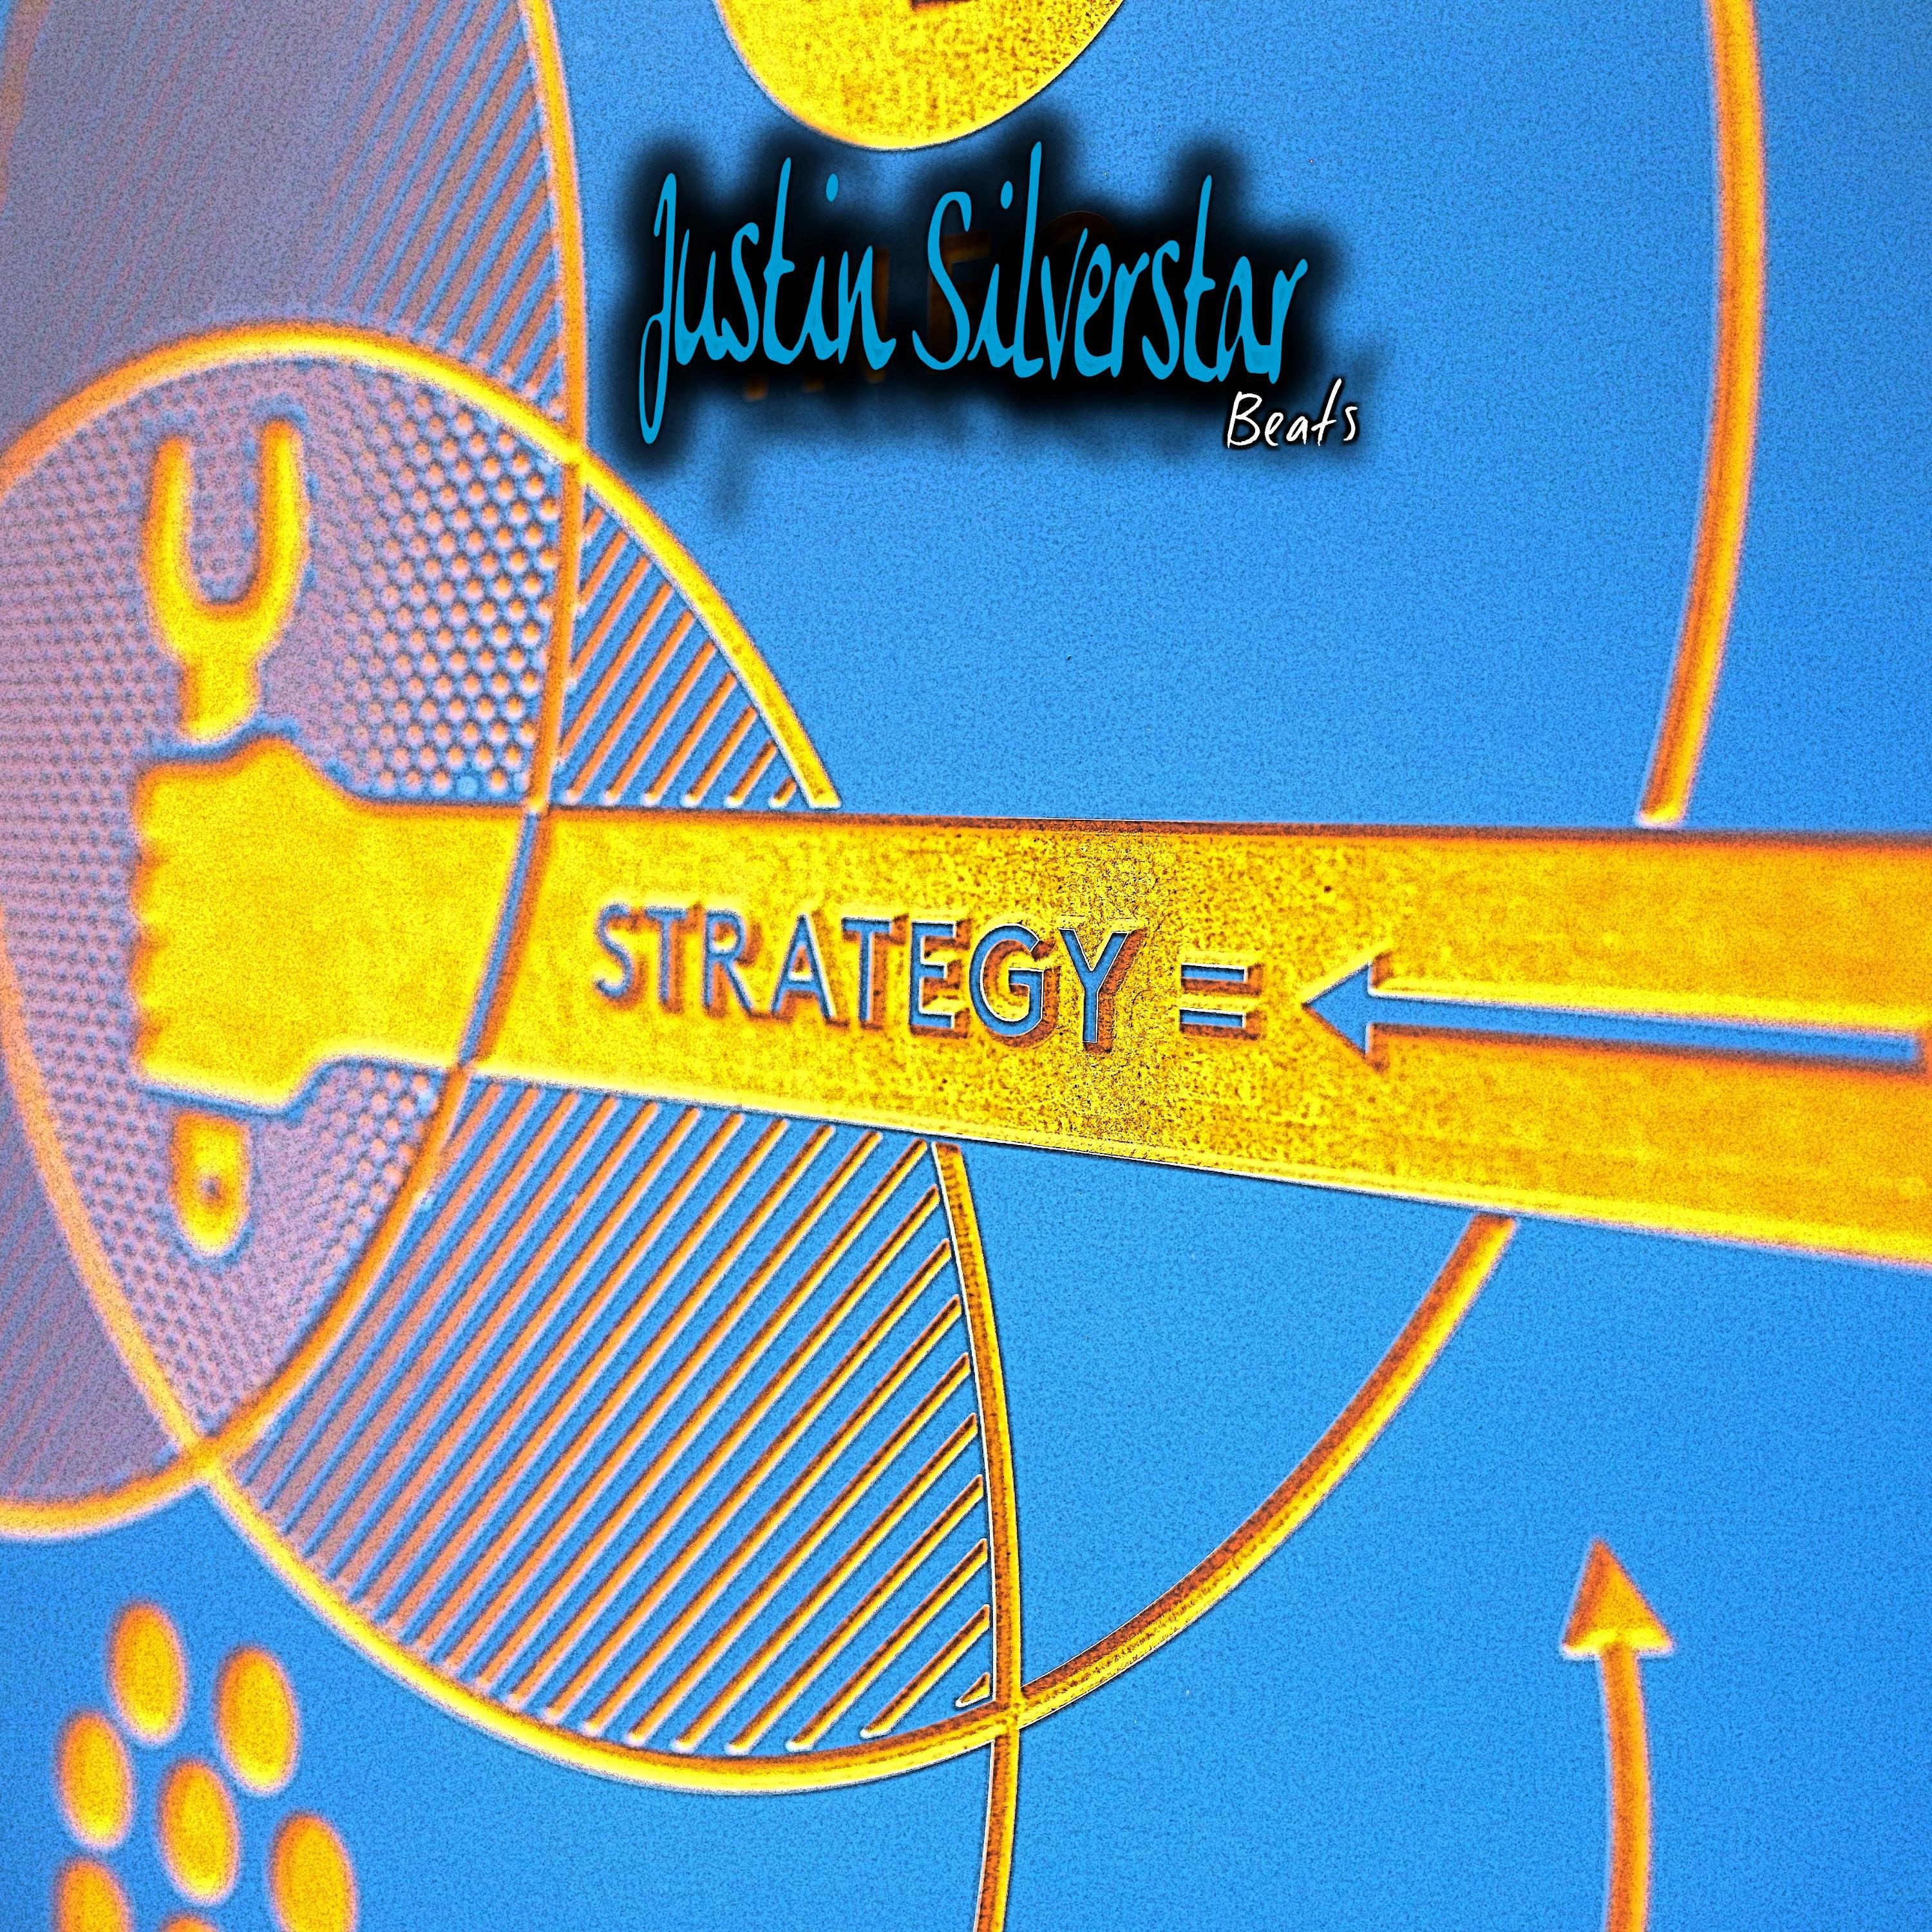 Justin Silverstar - Strategy